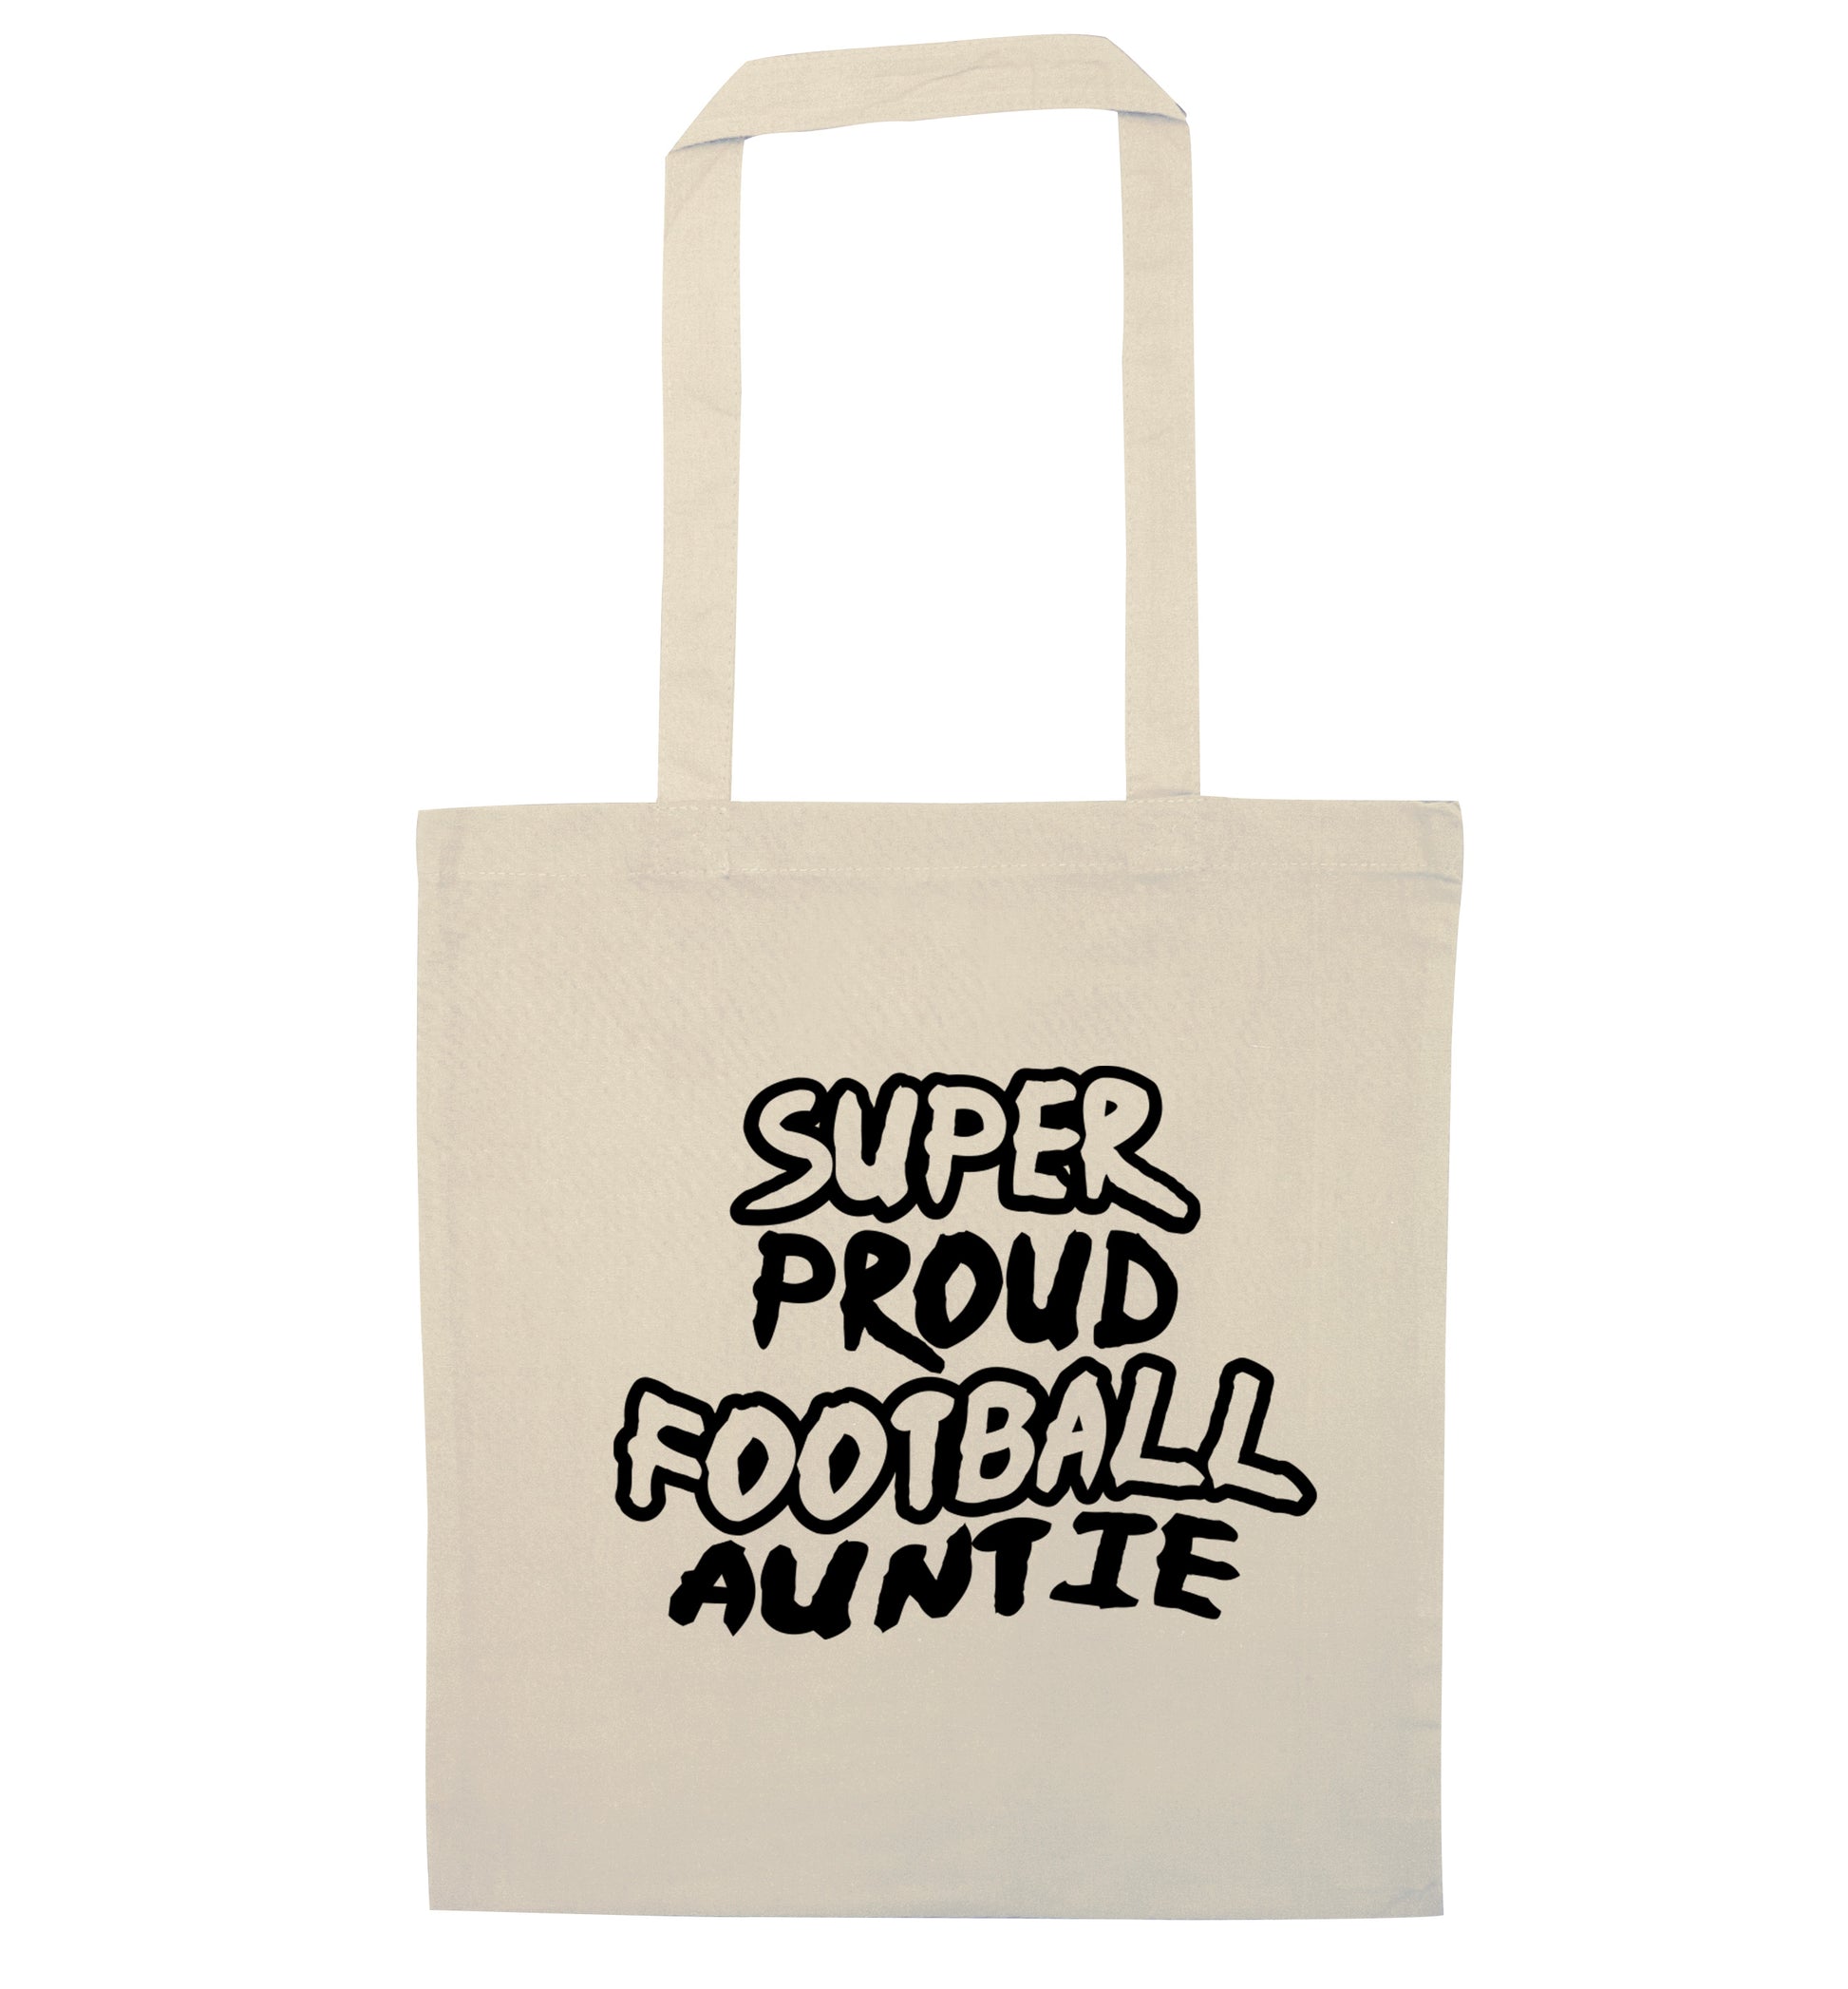 Super proud football auntie natural tote bag